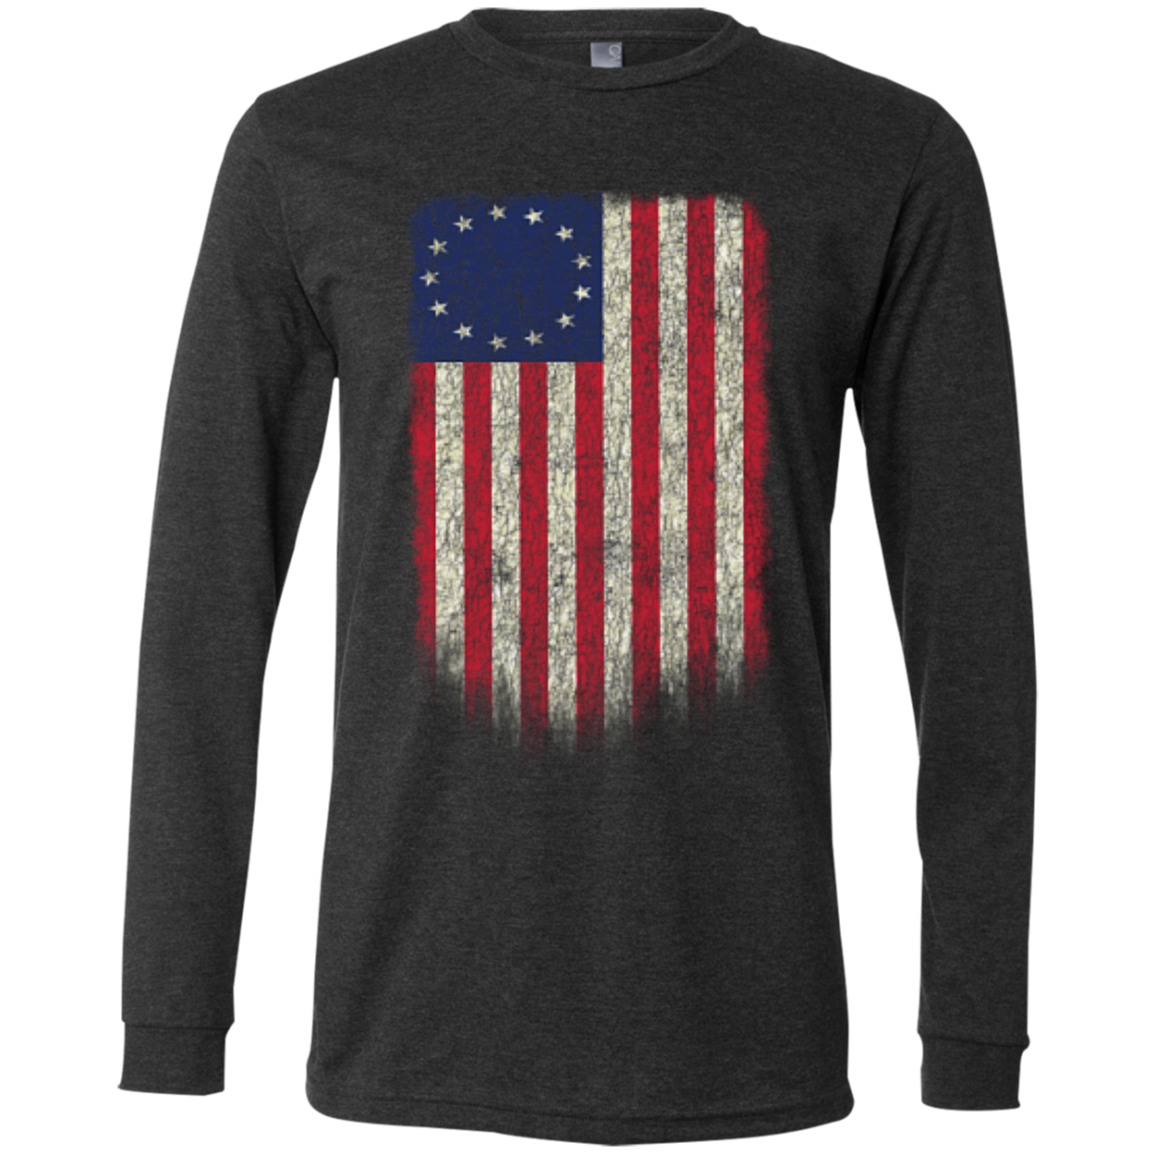 Betsy Ross Flag 13 Colonies Men's Jersey LS T-Shirt - Trumpshop.net